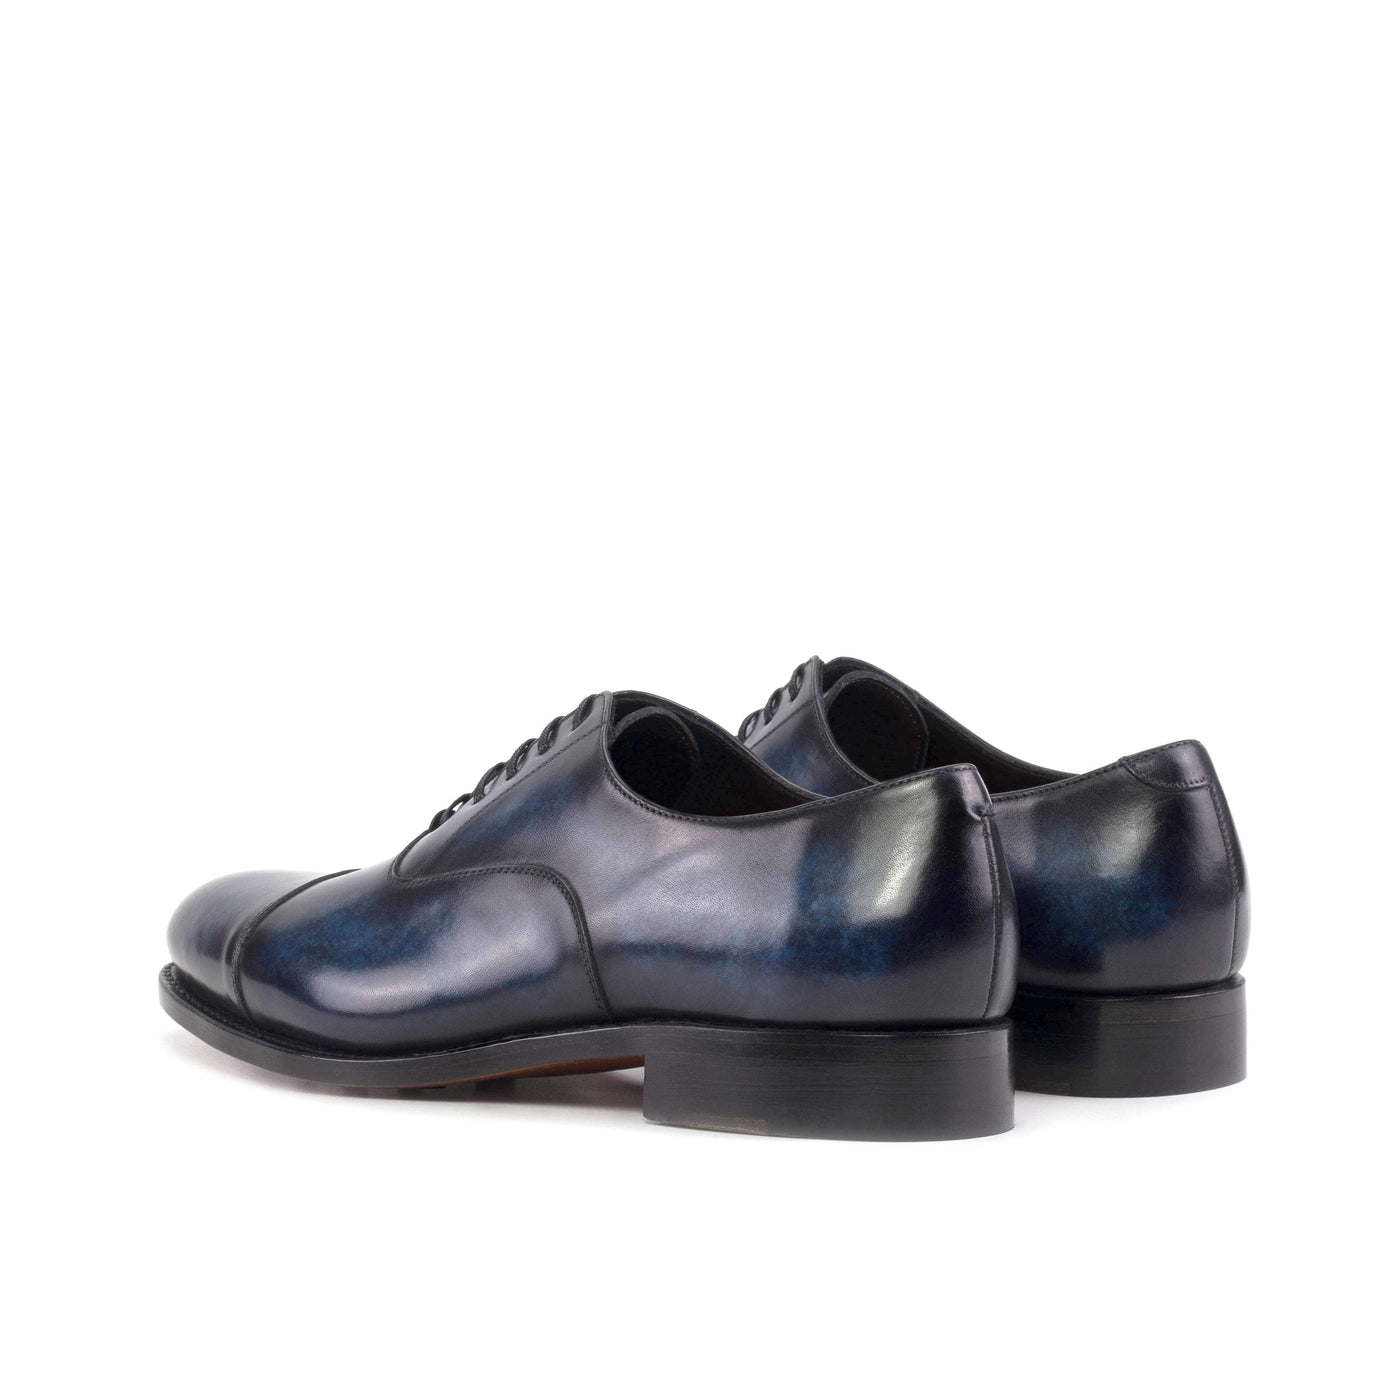 Men's Oxford Shoes Patina Leather Goodyear Welt Blue 5635 4- MERRIMIUM